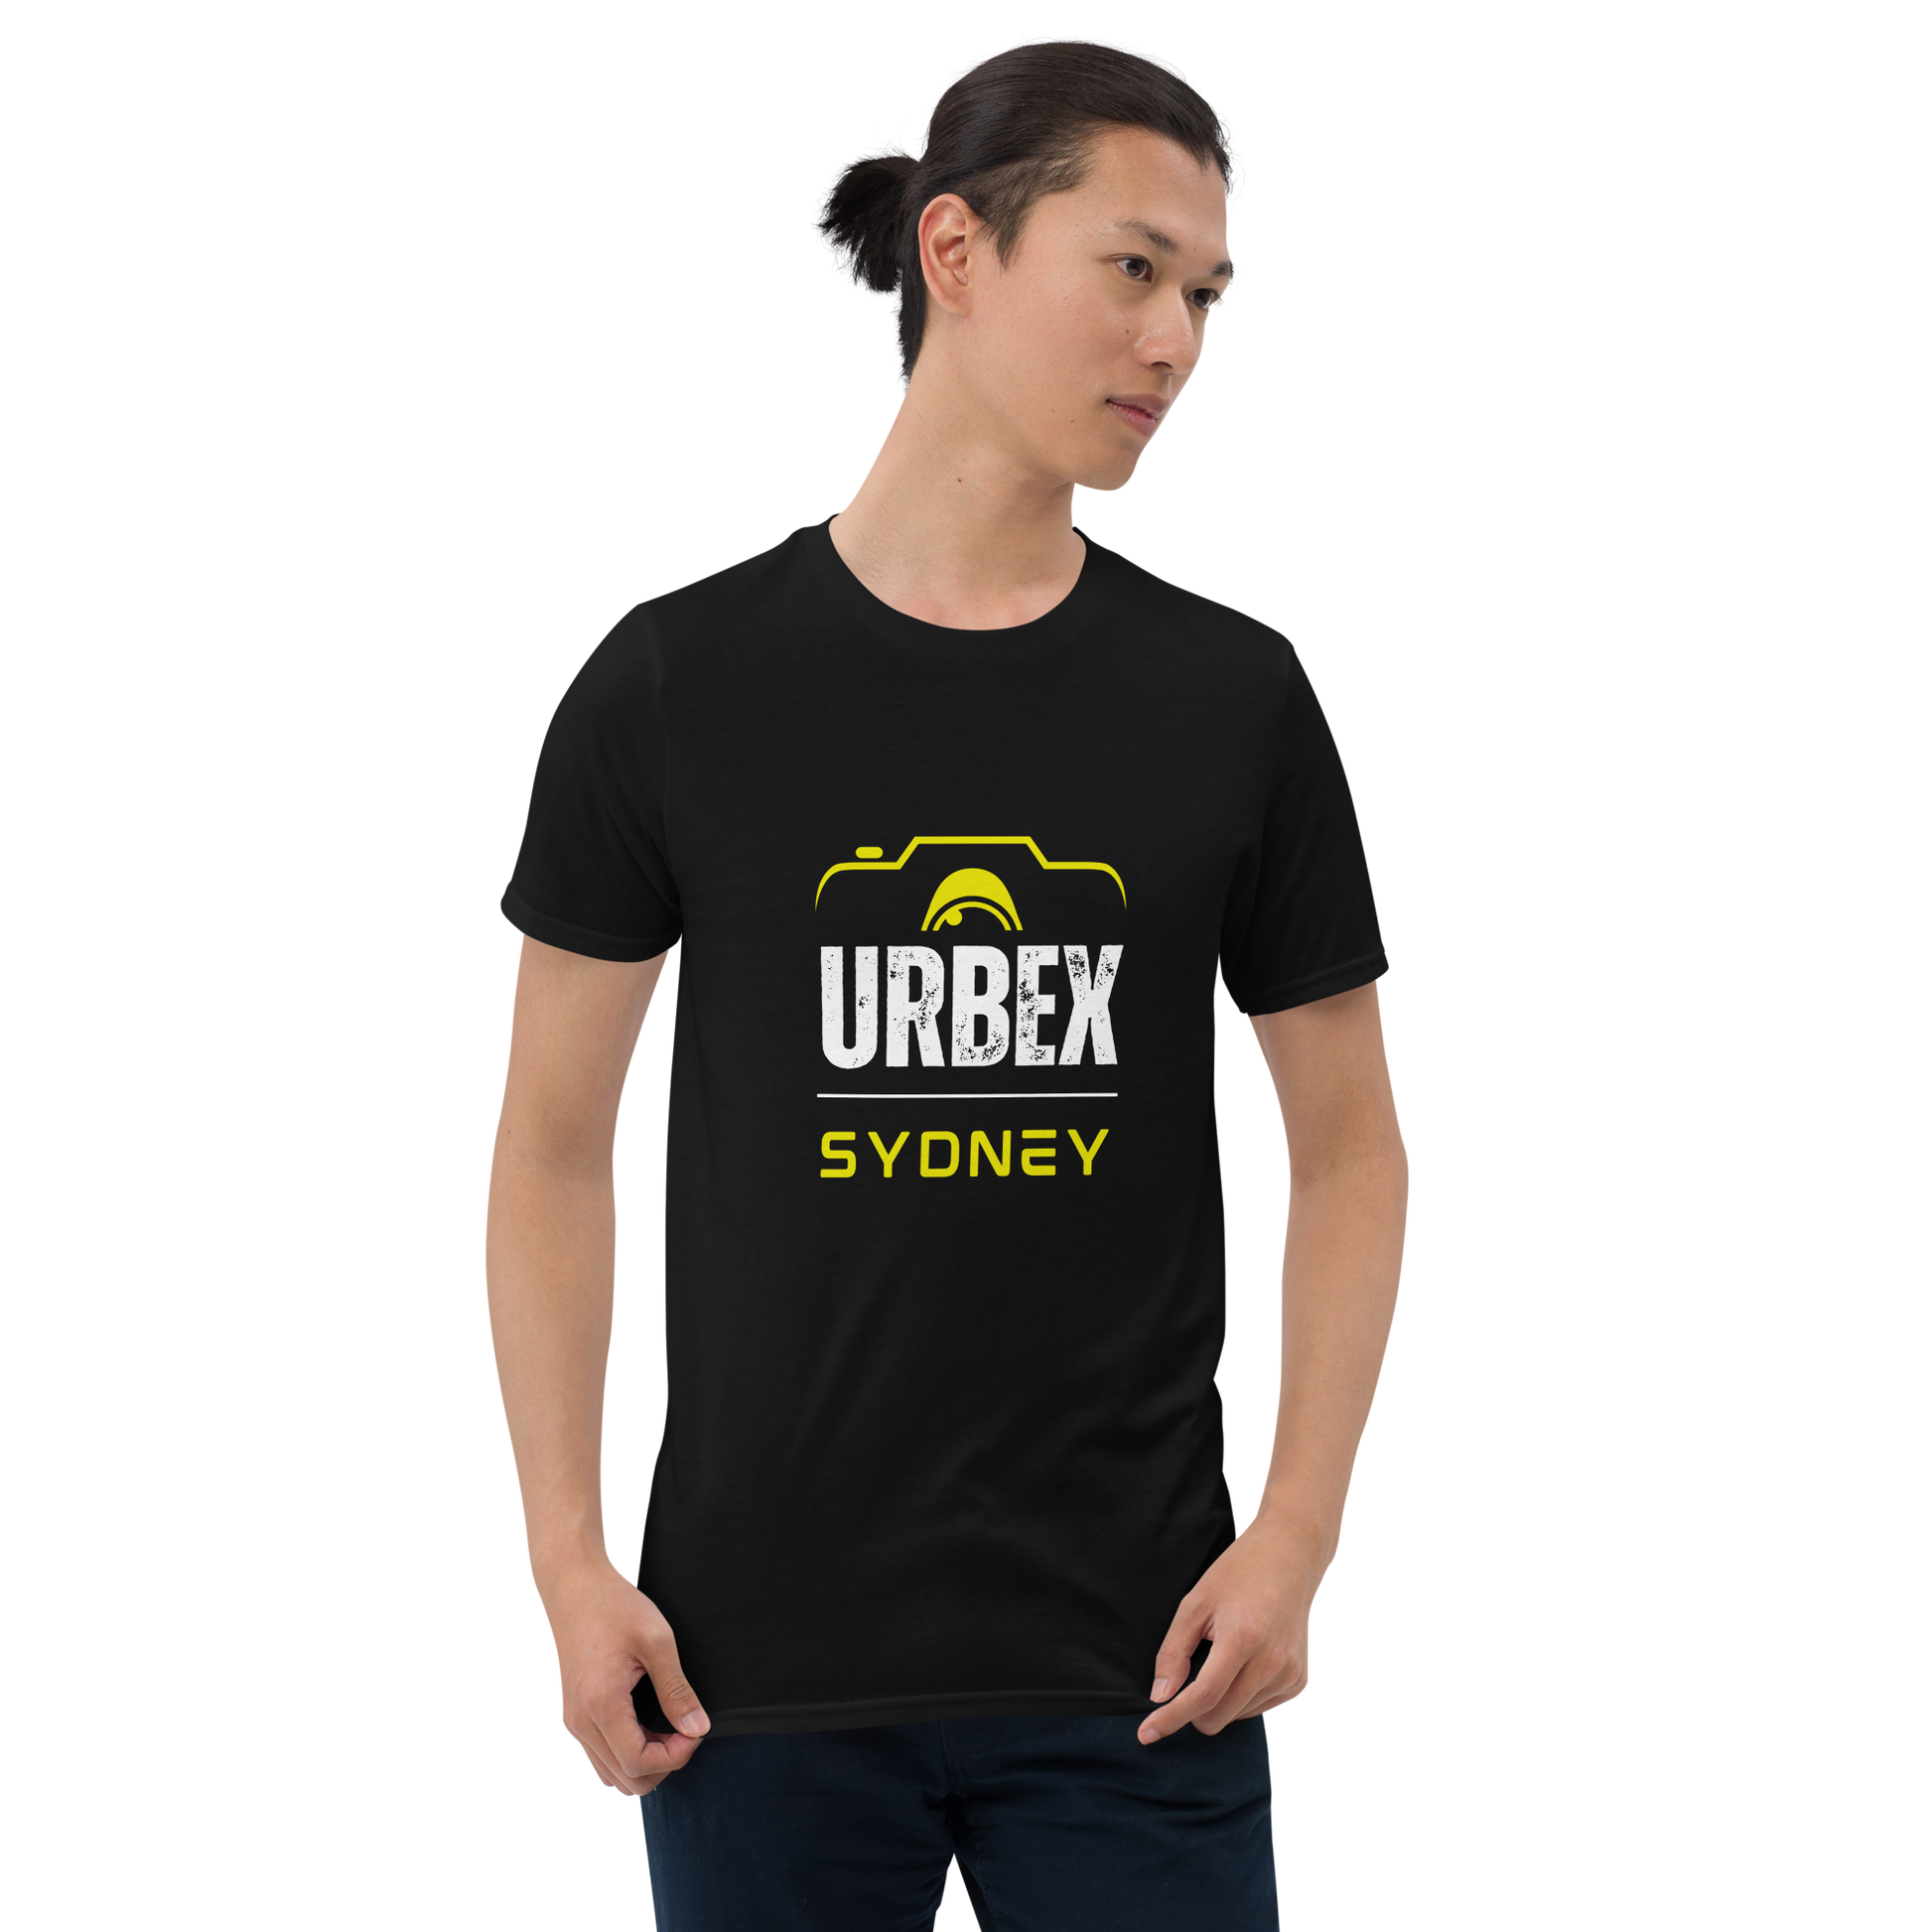 Sydney Urbex Black and Yellow T-Shirt Unisex